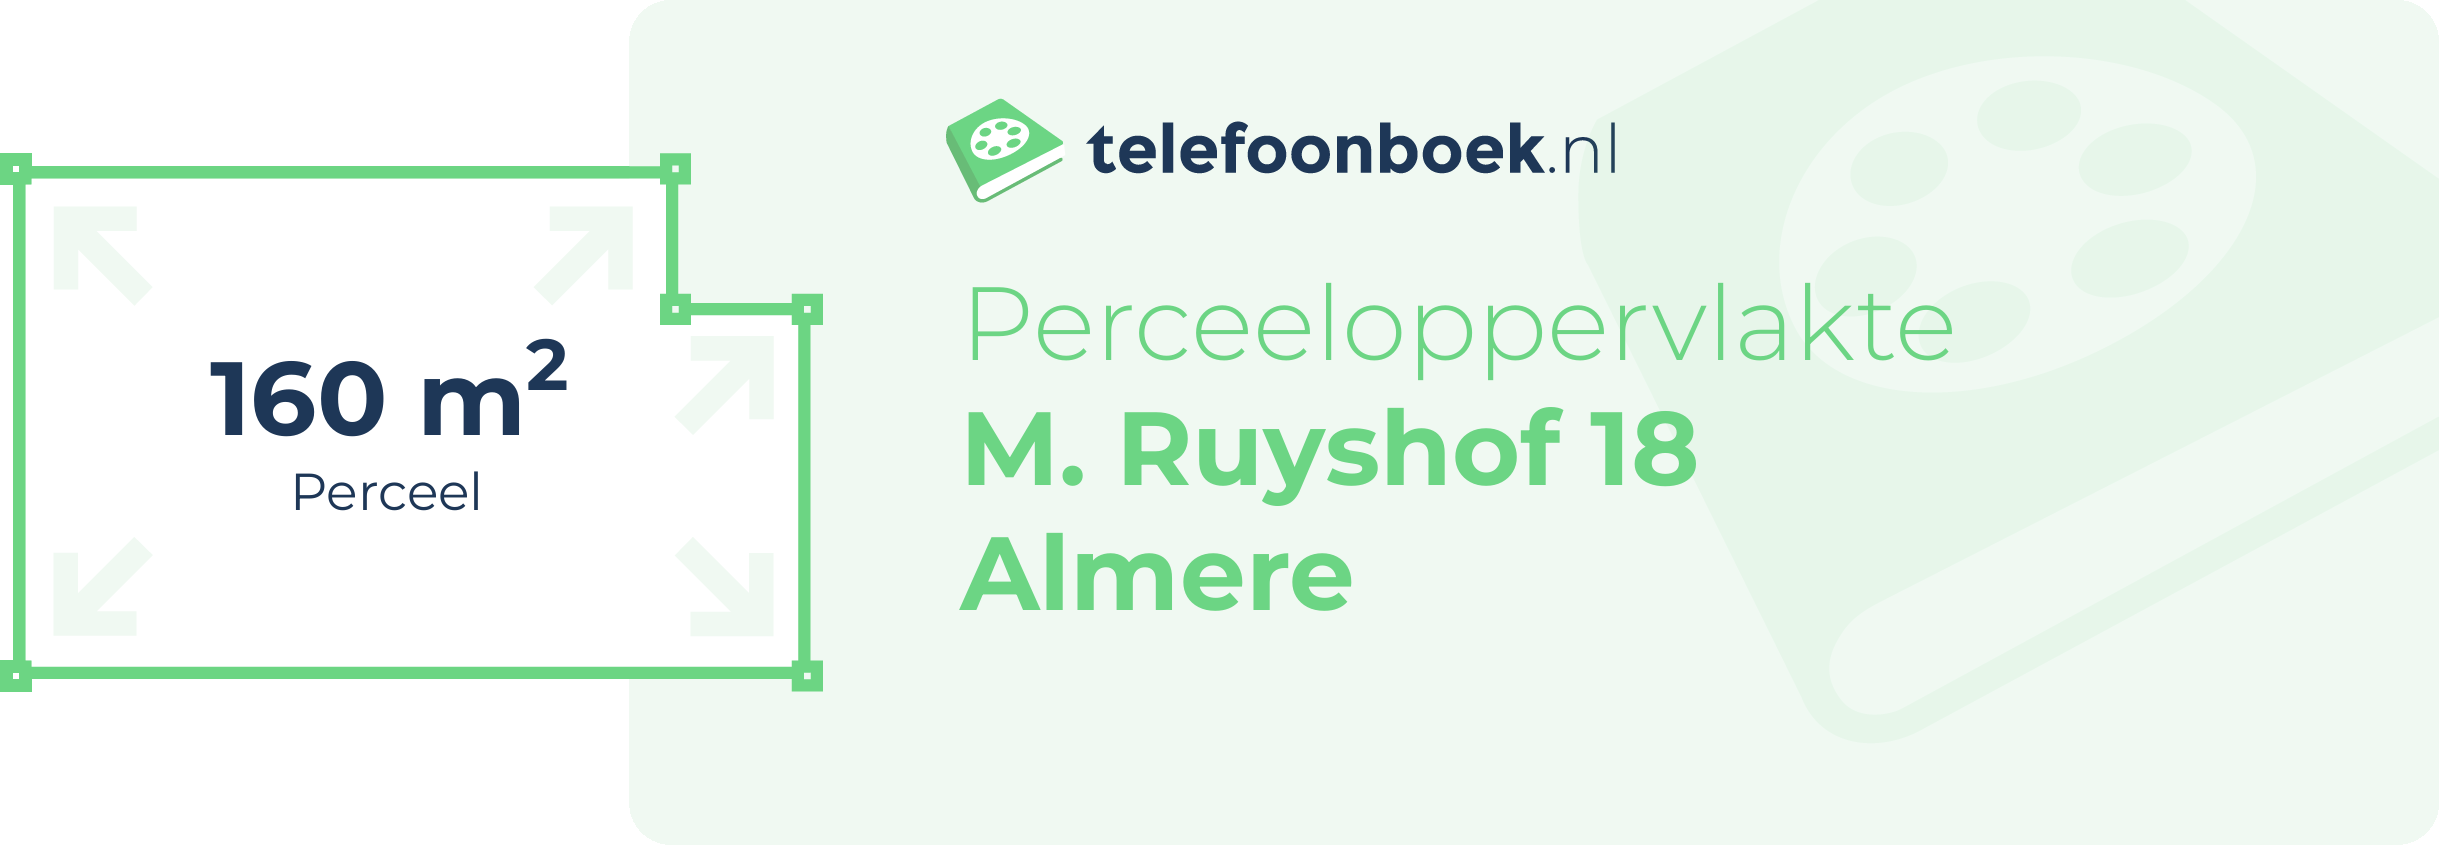 Perceeloppervlakte M. Ruyshof 18 Almere